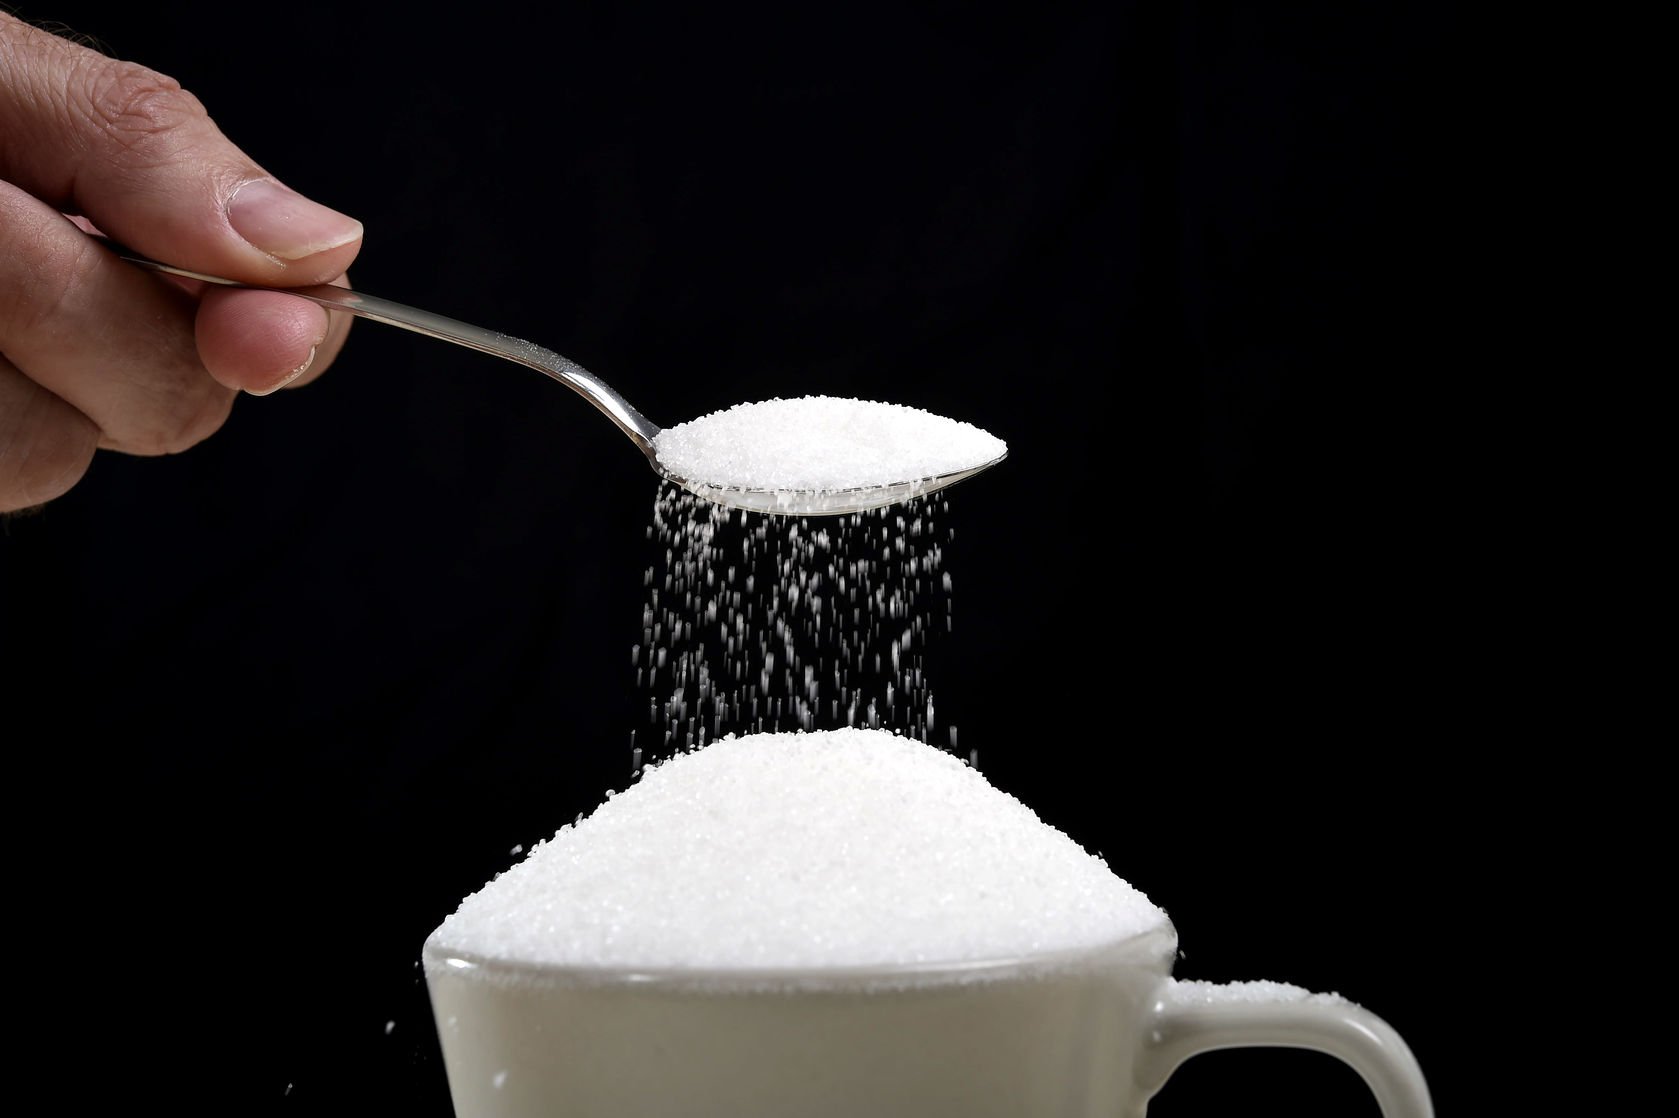 harga gula pasir, harga gula 1 kg, harga gula naik, impor gula, kementerian perdagangan, Agus Suparmanto